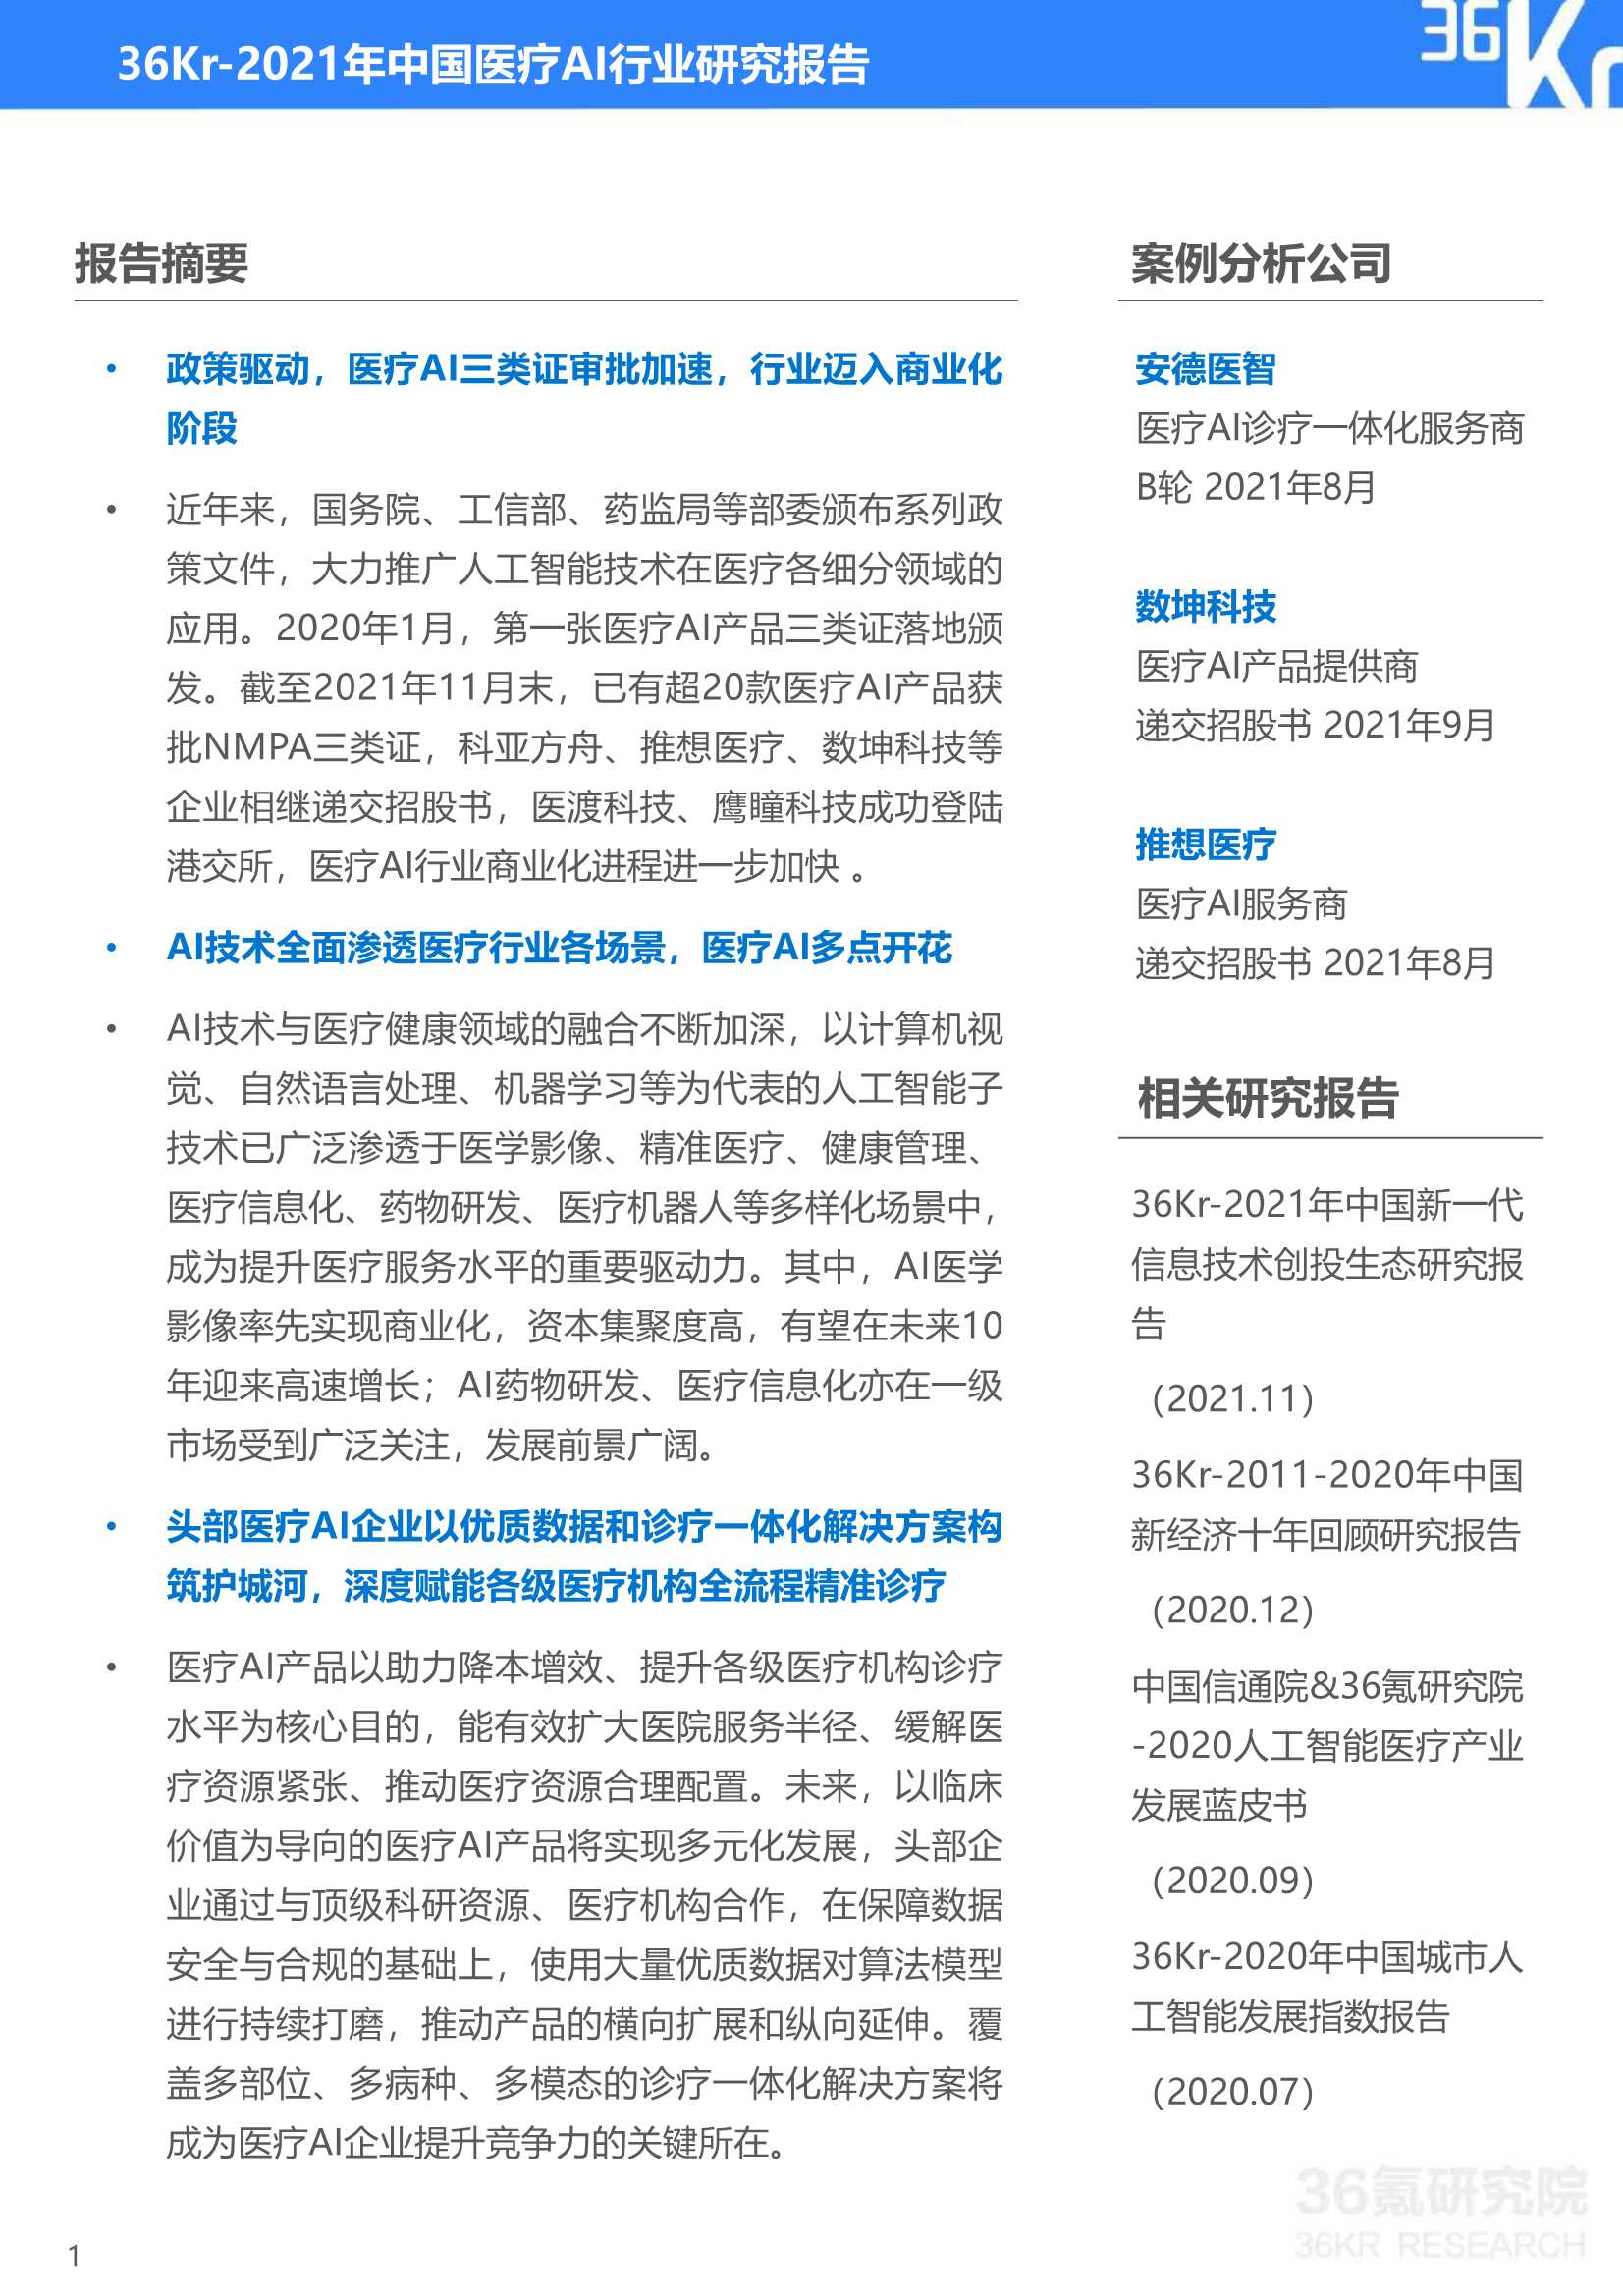 36Kr-2021年中国医疗AI行业研究报告-2021.12-40页